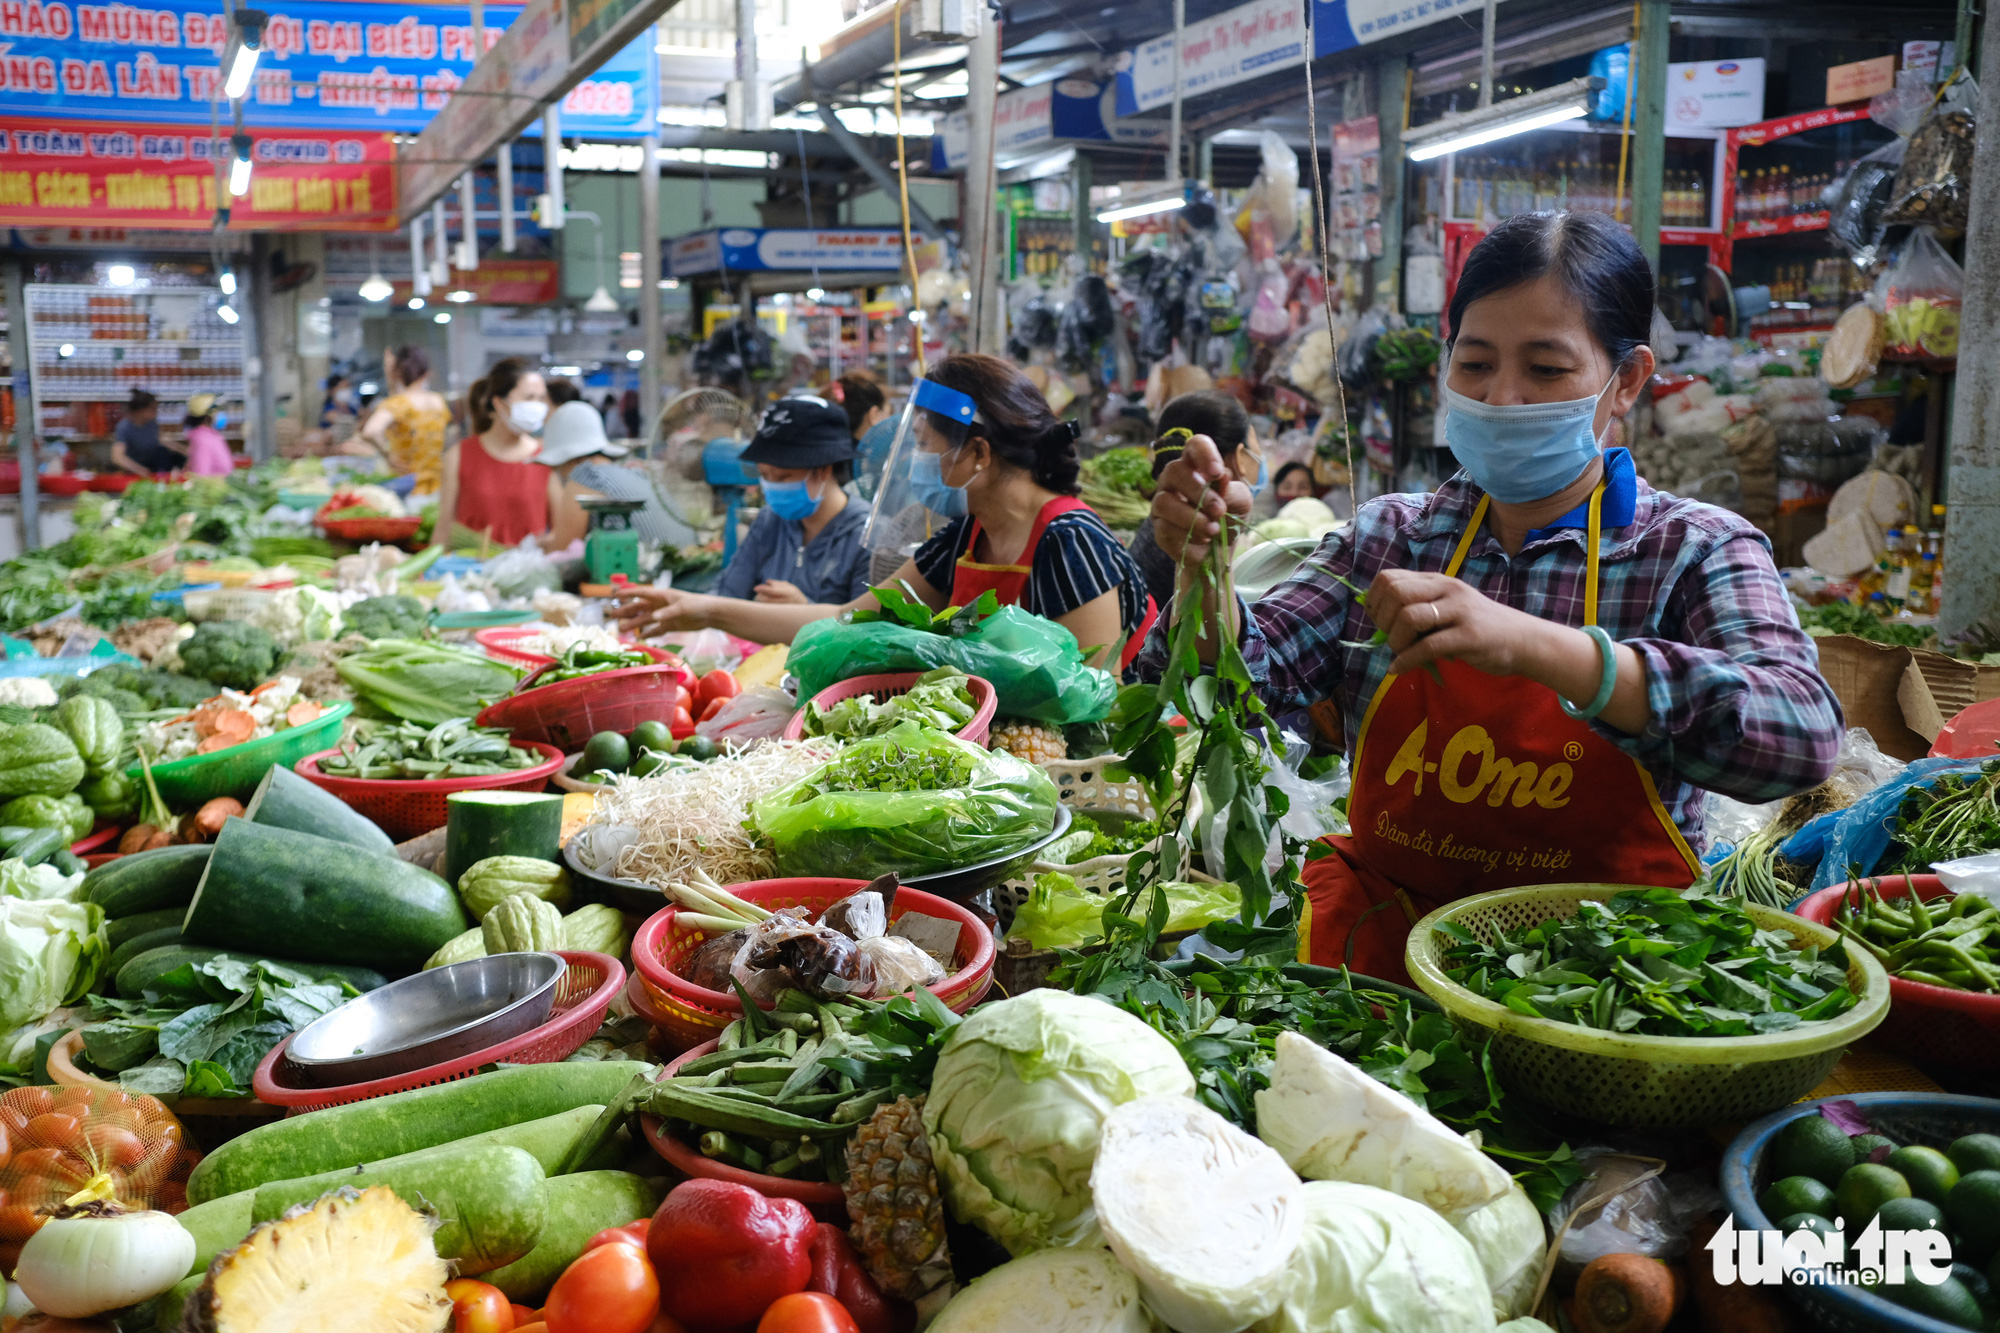 Merchants wear face masks at a market in Da Nang City, Vietnam, May 9, 2021. Photo: Tan Luc / Tuoi Tre